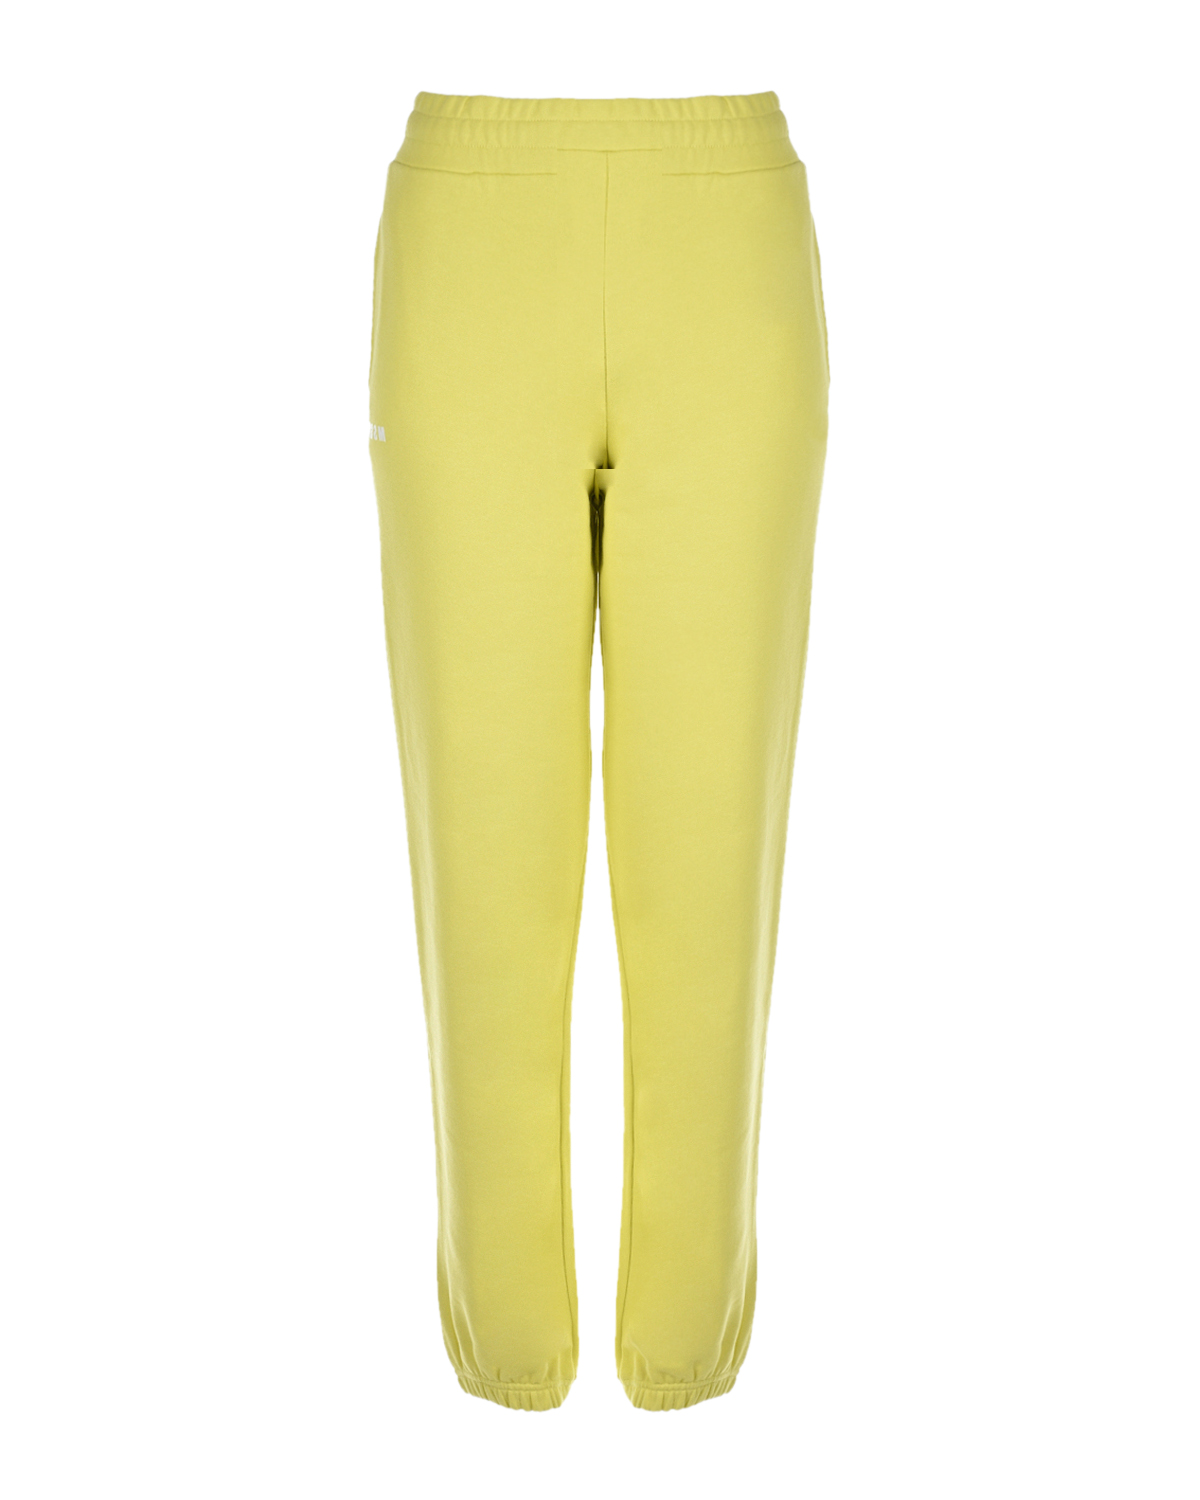 Желтые спортивные брюки MSGM, размер 40, цвет желтый - фото 1